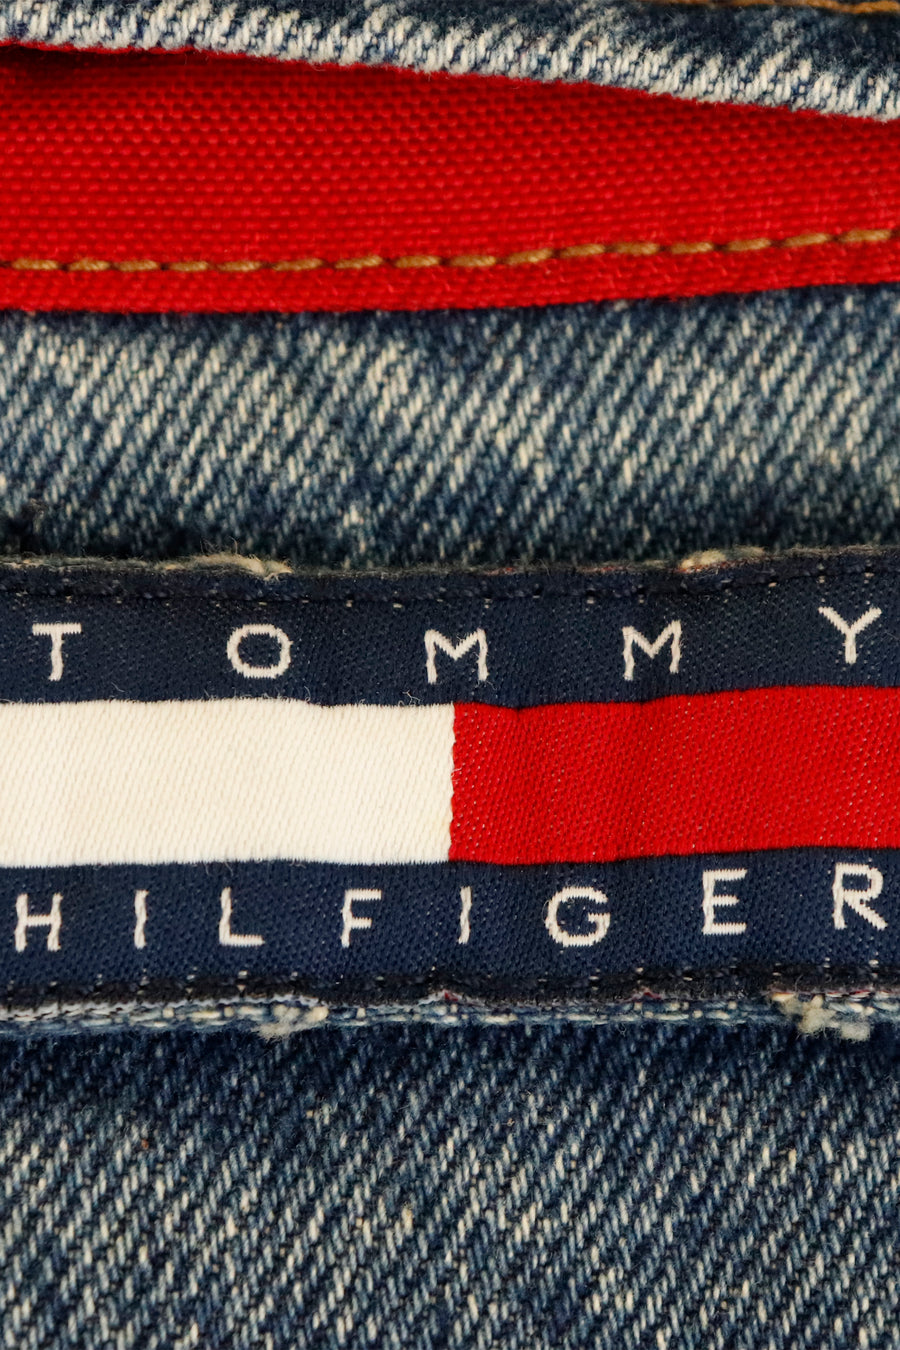 Vintage Tommy Jeans Denim Jean Jacket Sz L